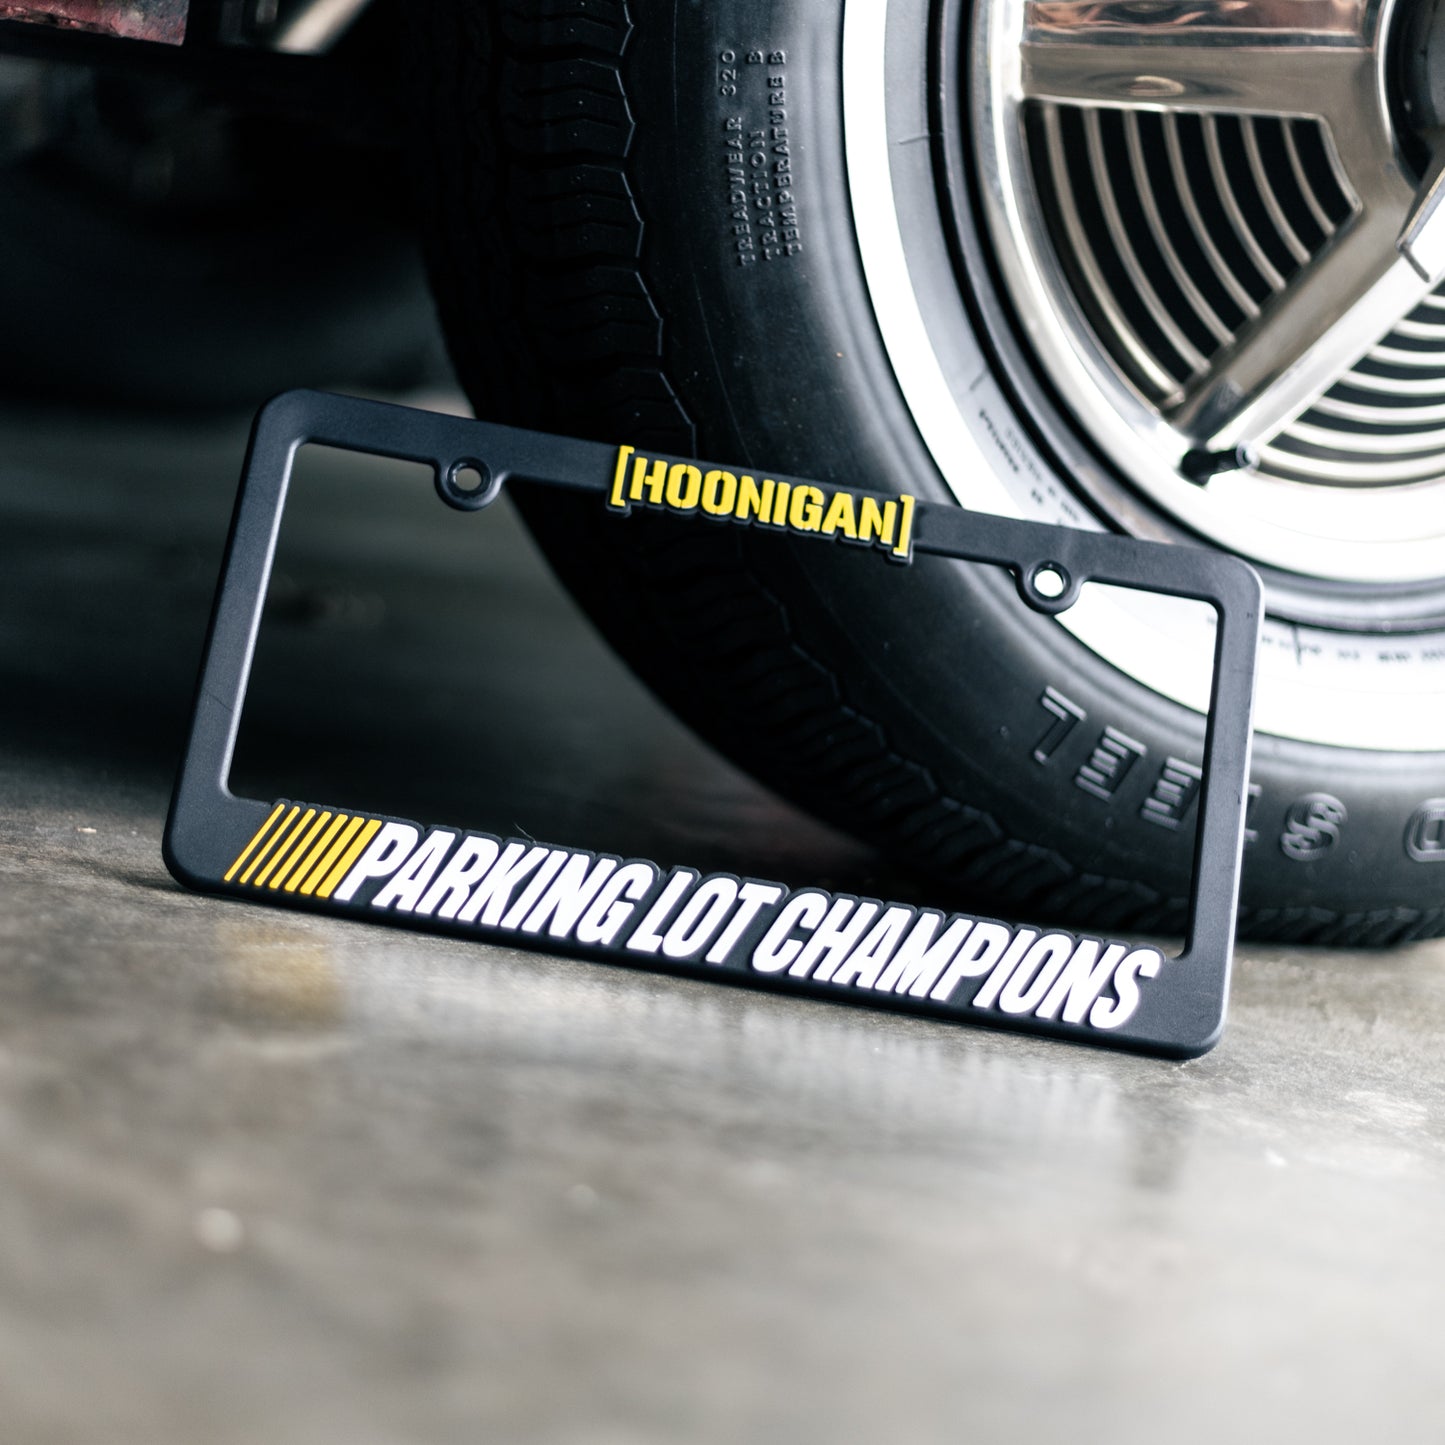 Hoonigan PARKING LOT CHAMPIONS License Plate Frame